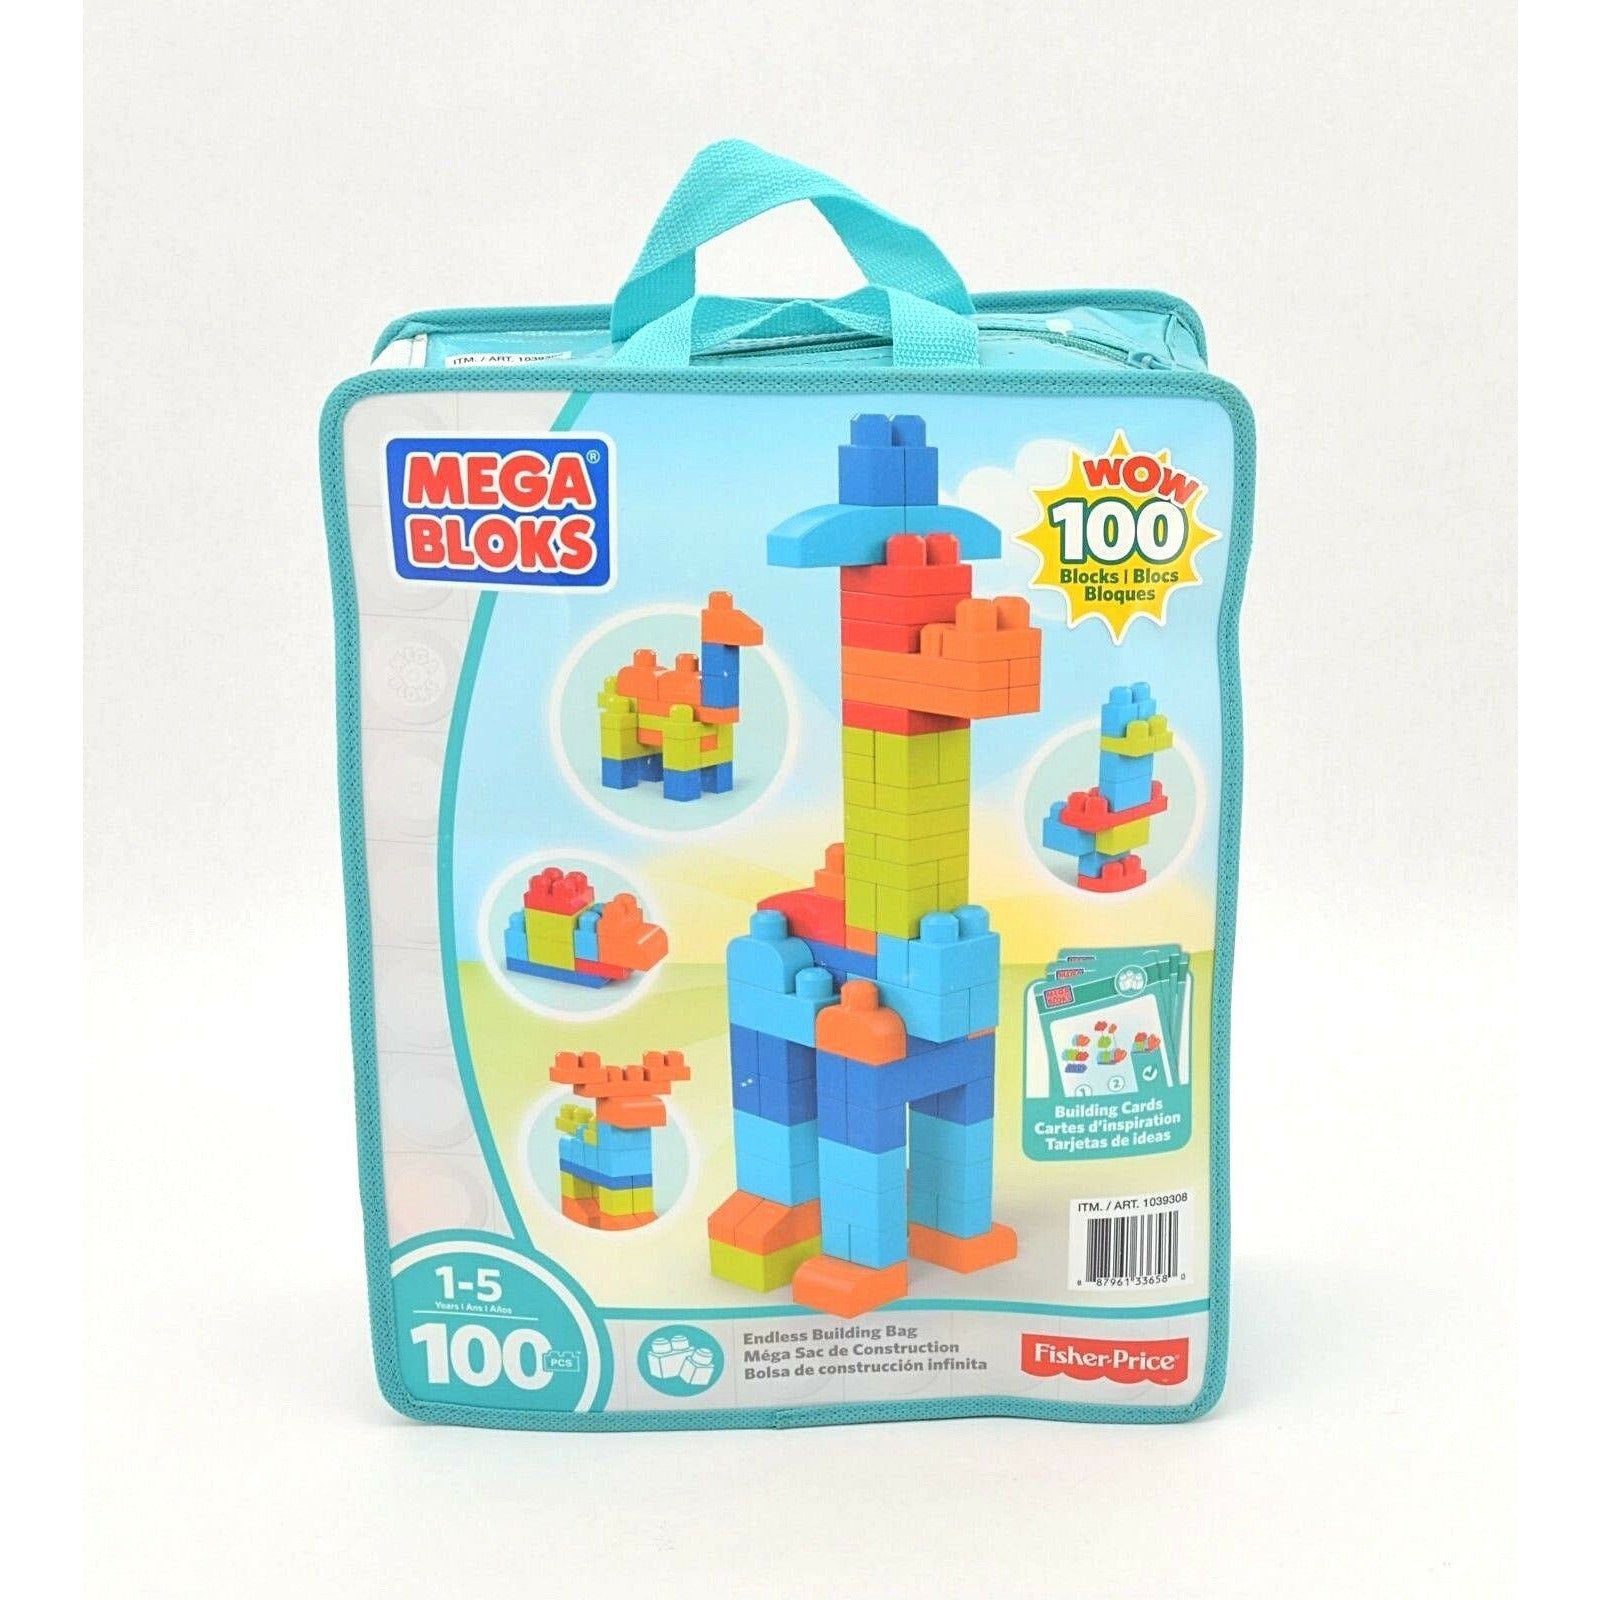 Mega Bloks Building Set / 100 Piece / Fisher Price